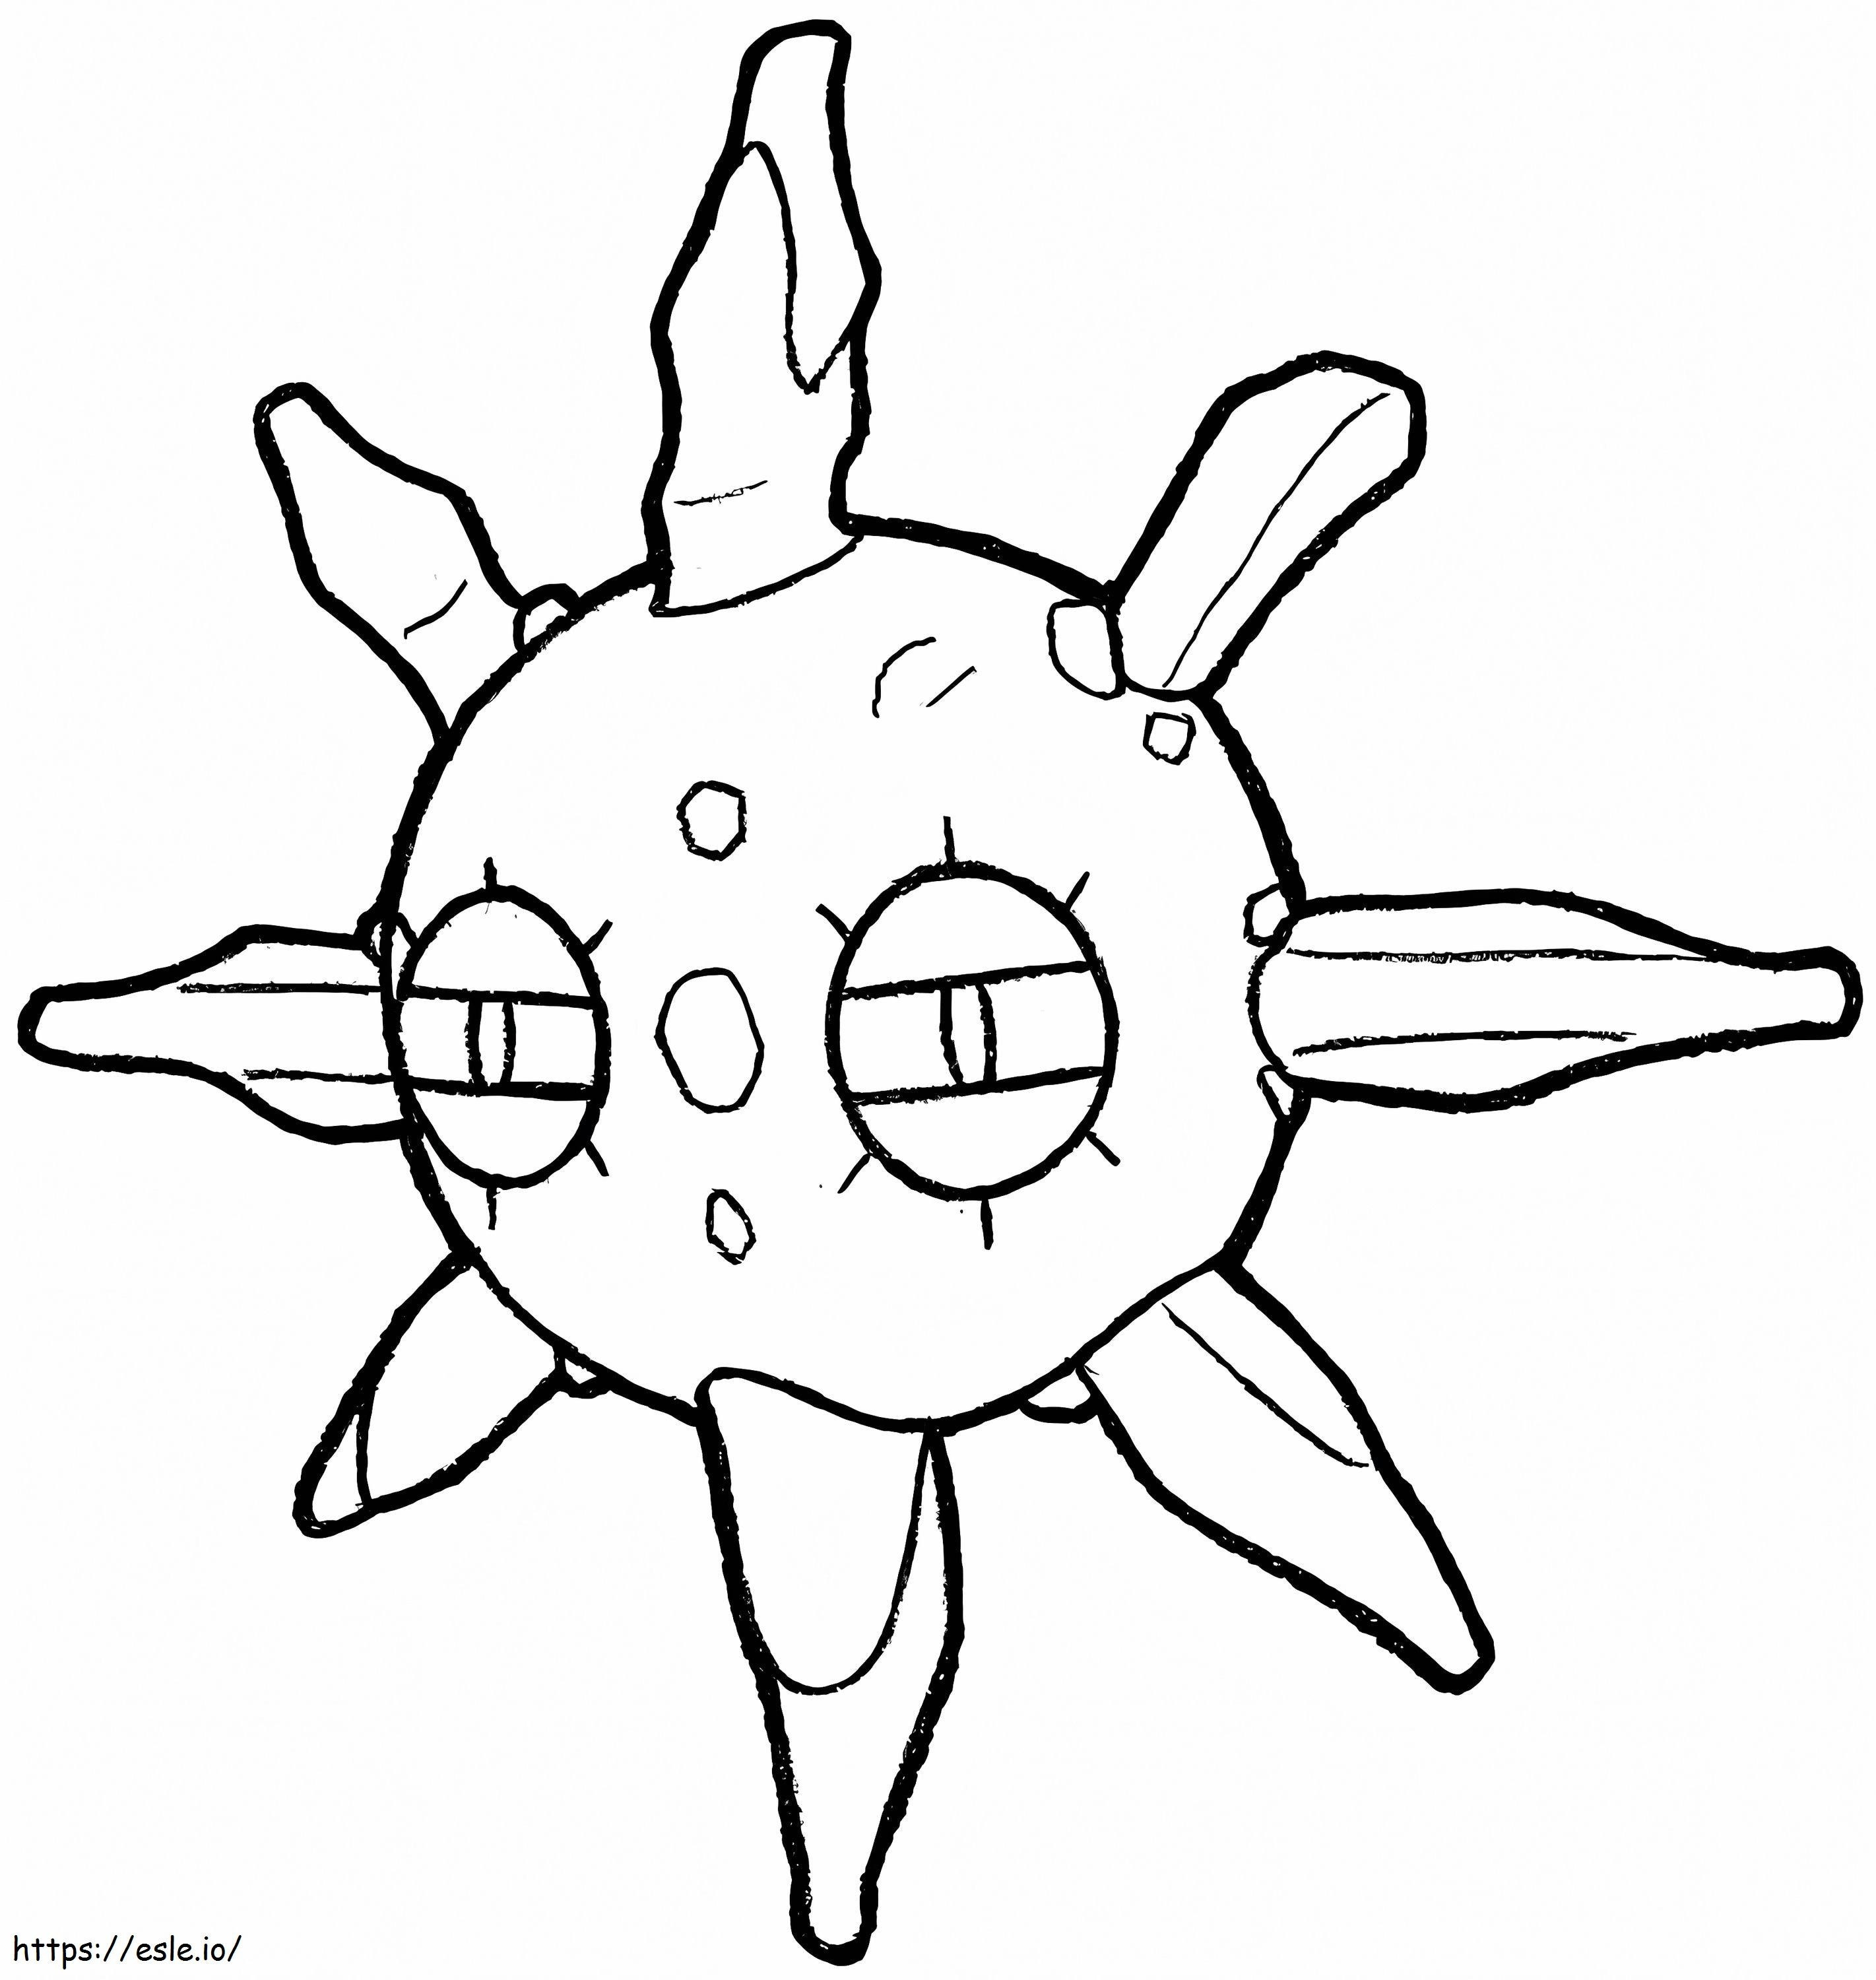 Printable Solrock Pokemon coloring page